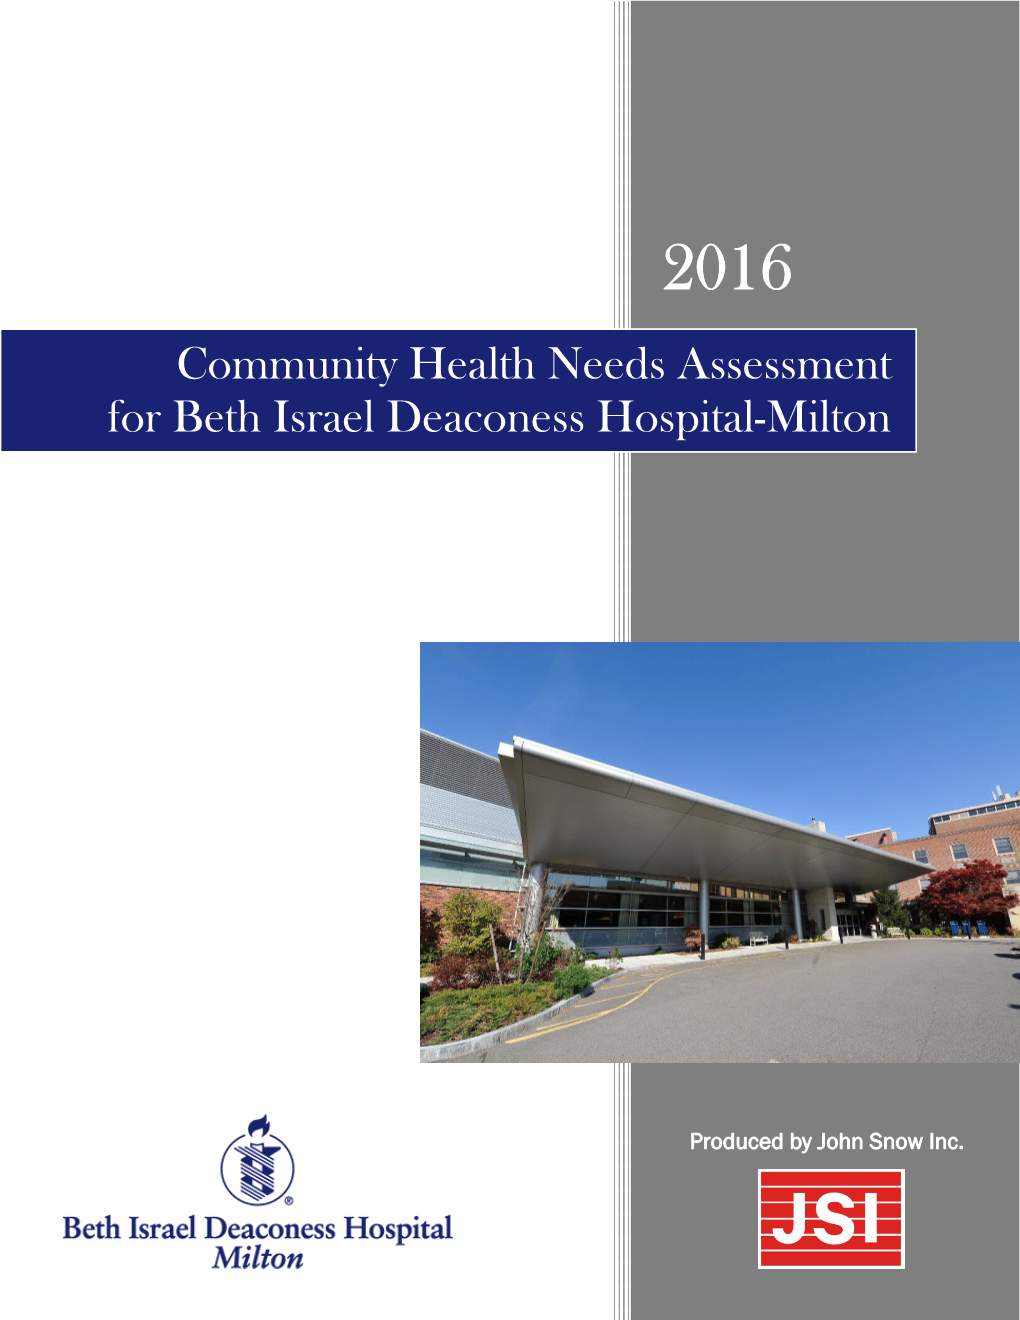 Community Health Needs Assessment for Beth Israel Deaconess Hospital-Milton